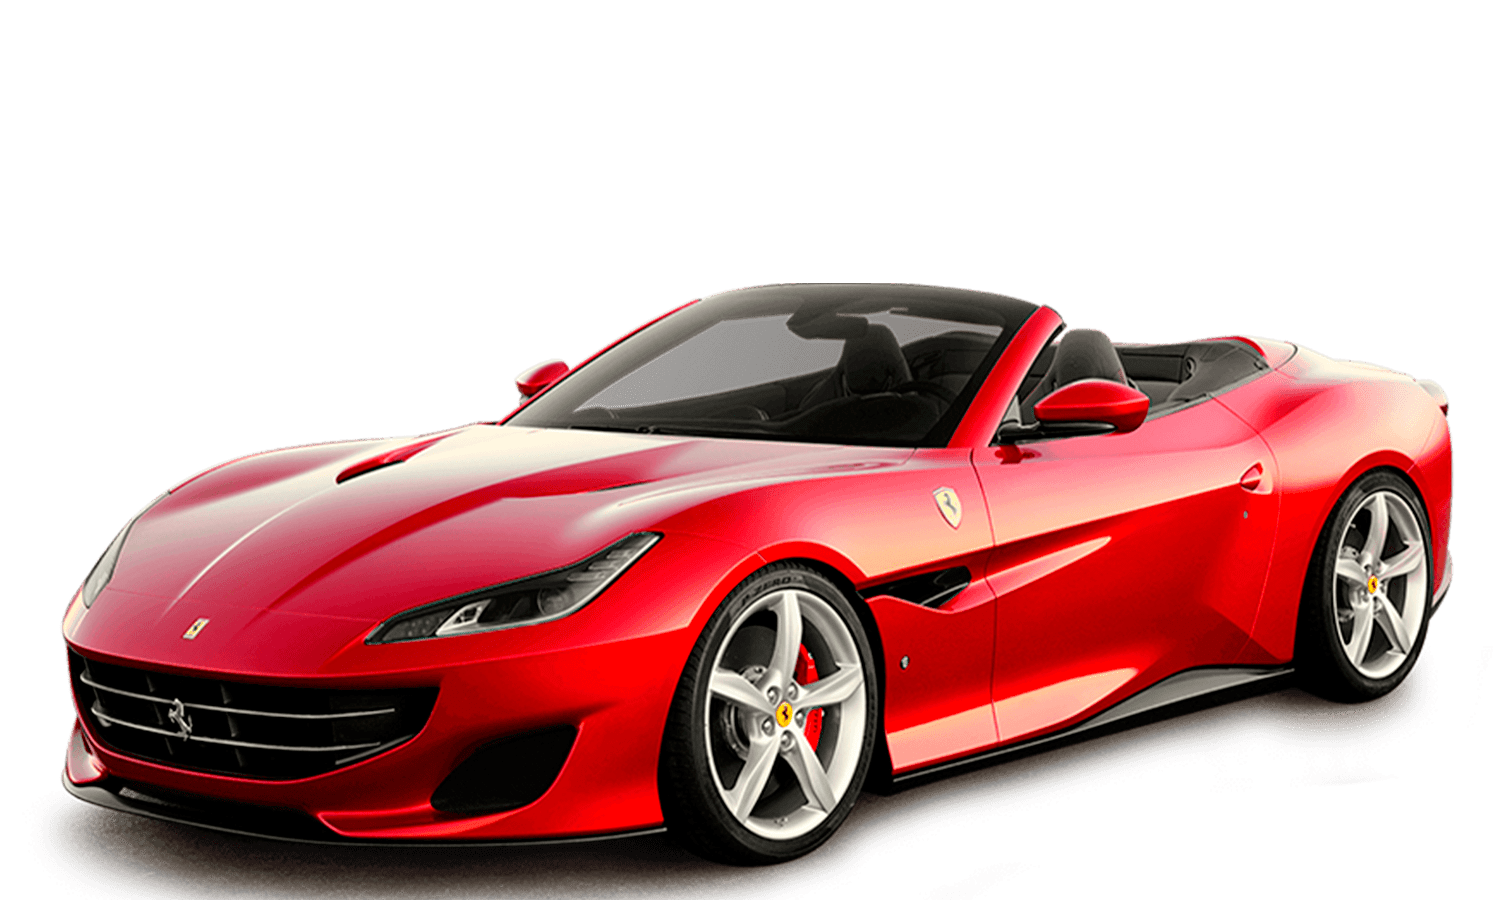 Ferrari Portofino, High-end, sports and luxury car rental